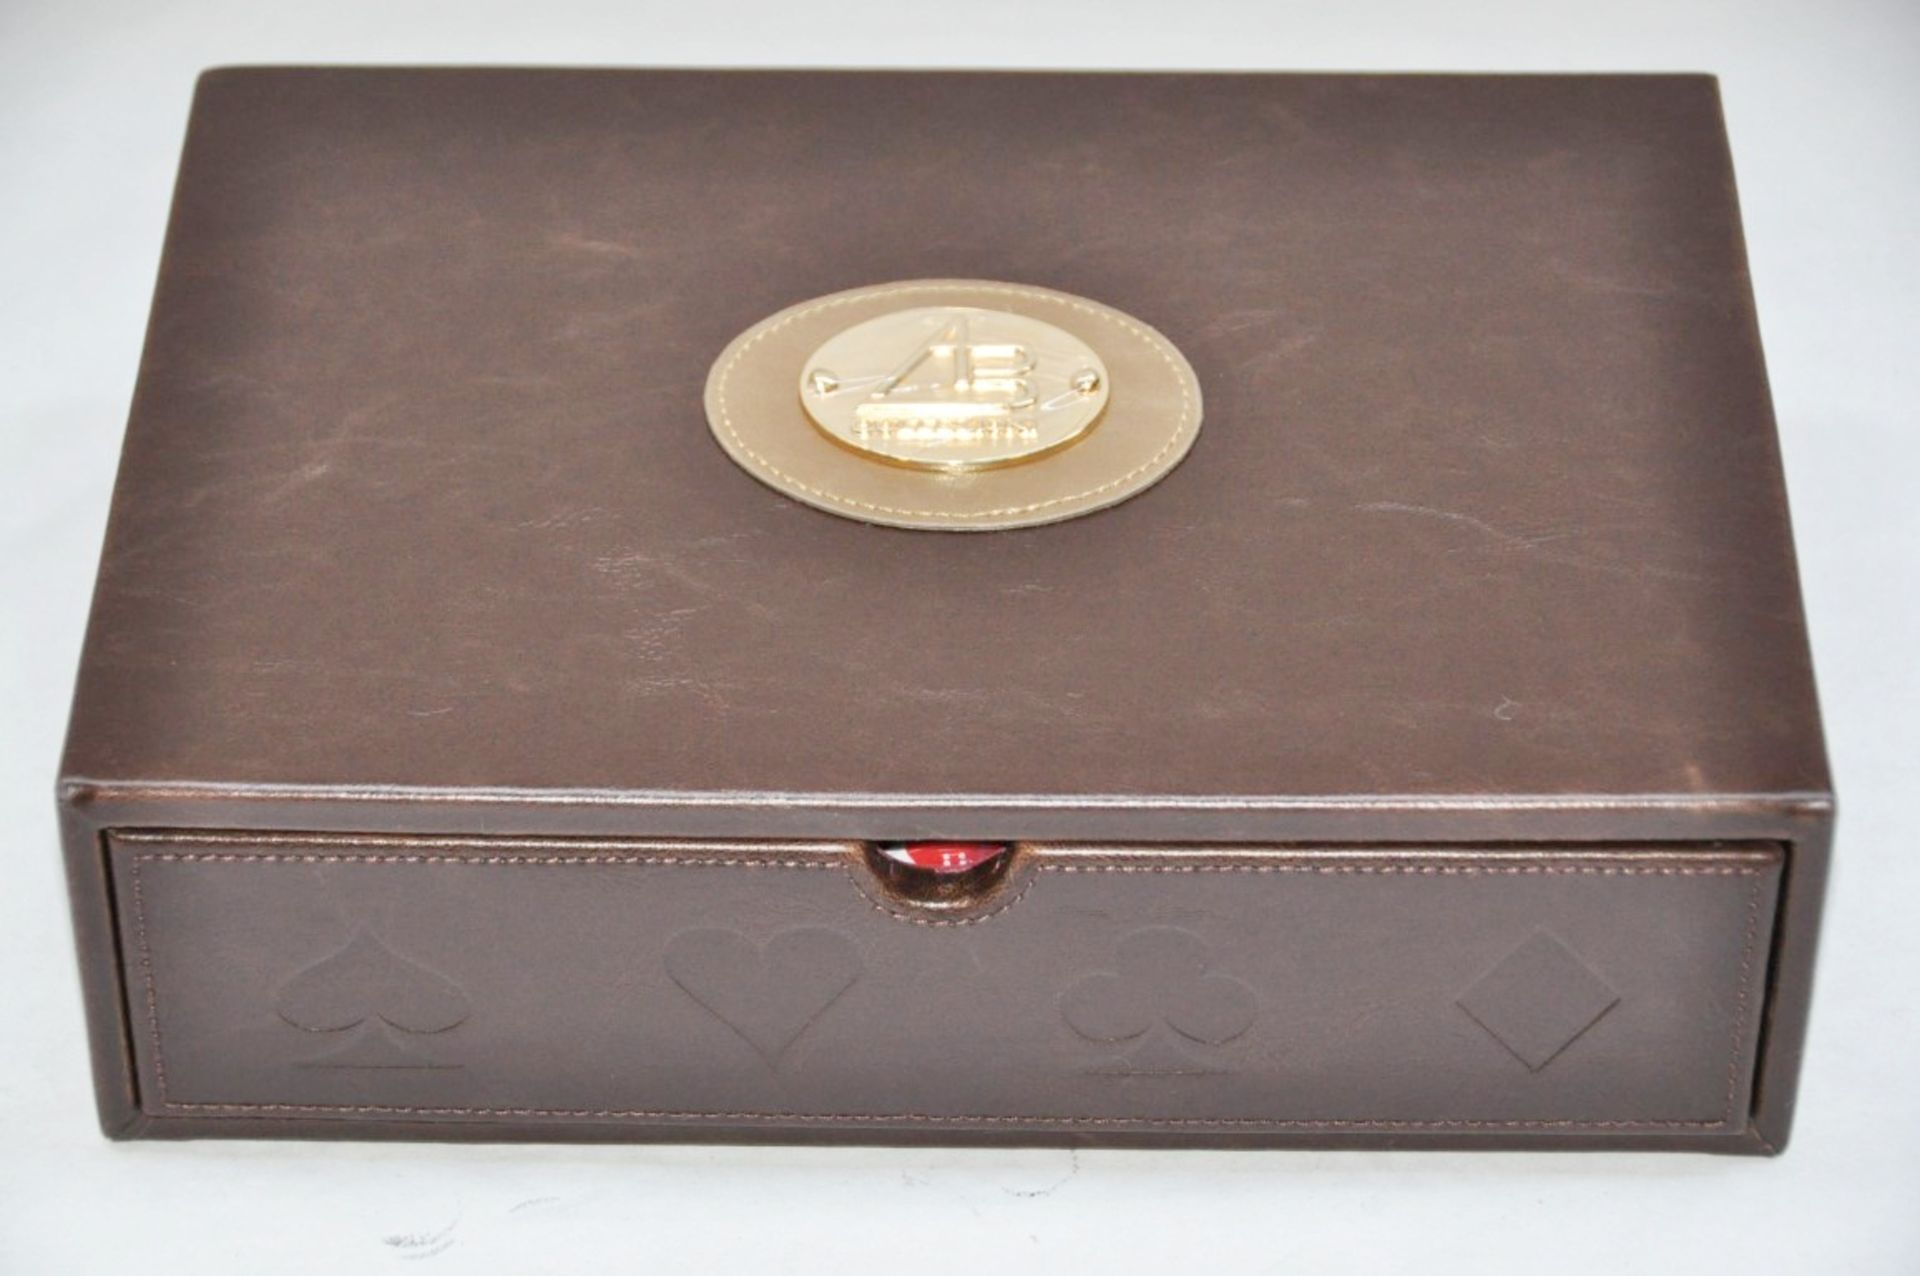 1 x "AB Collezioni" Italian Genuine Leather-Bound Luxury POKER SET (34048) - Ref LT003 - Features - Image 4 of 8